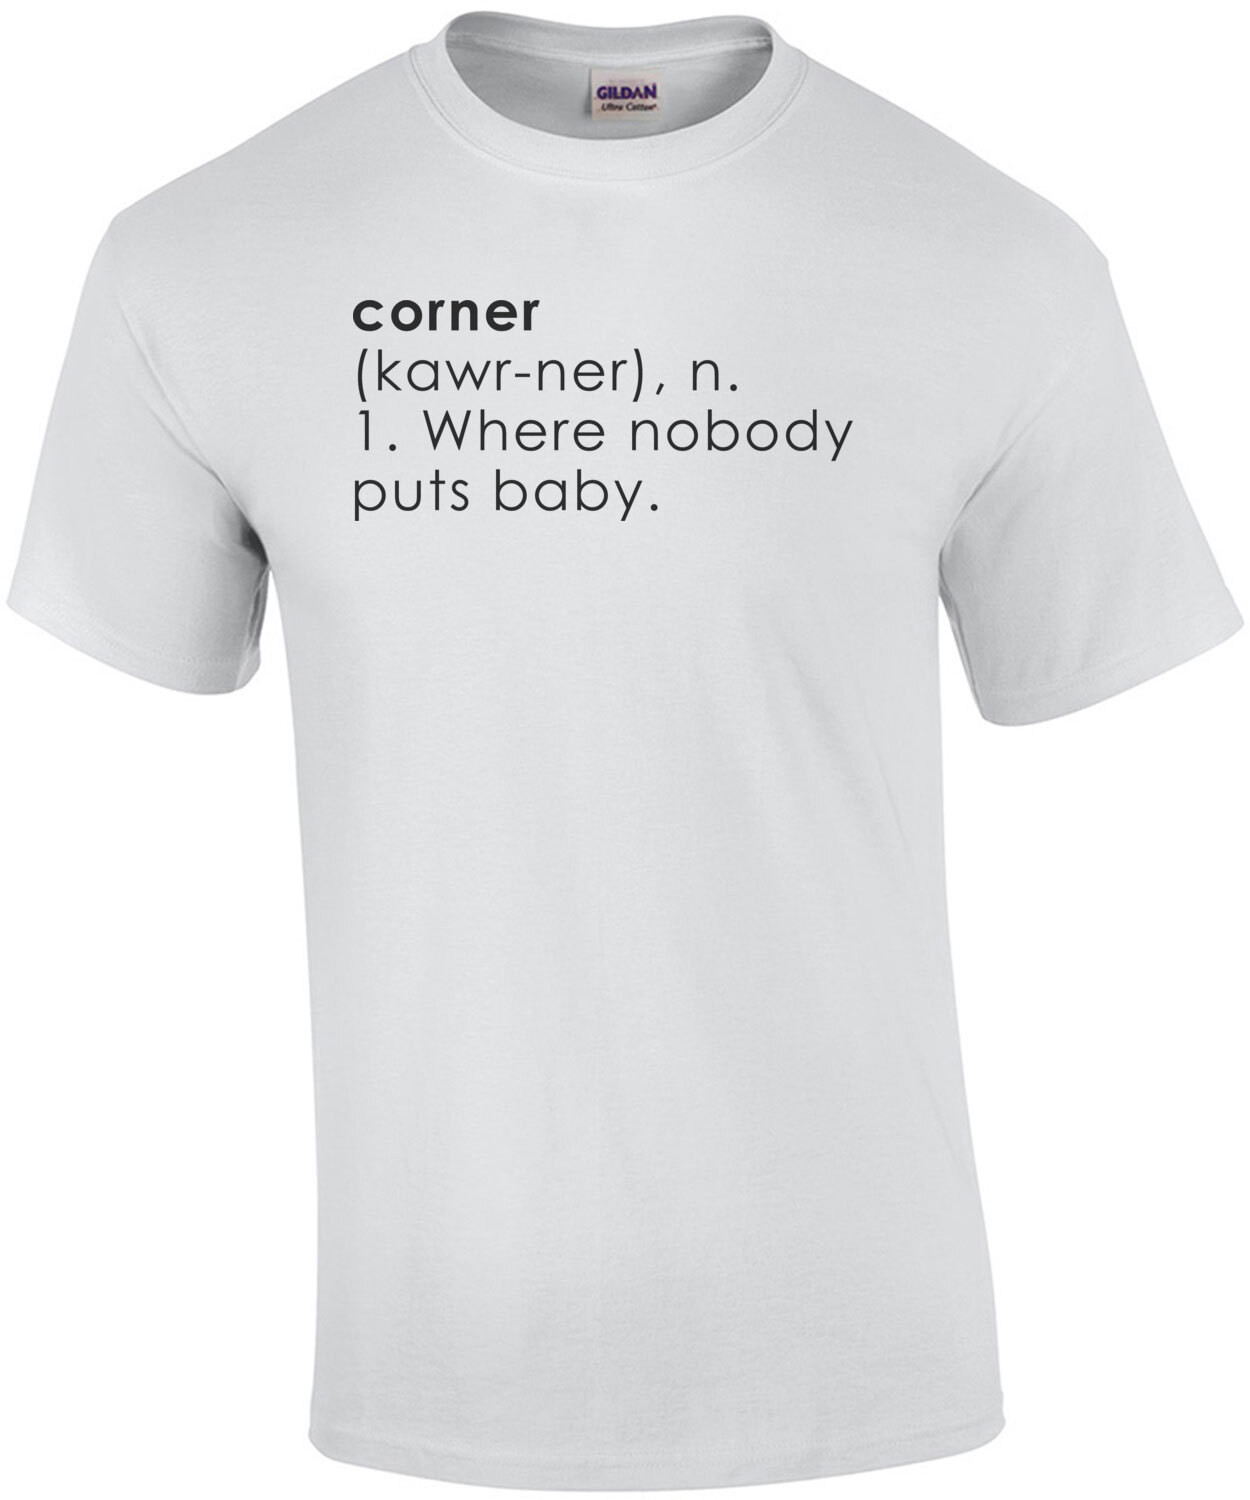 Corner Definition 1. Where nobody puts Baby. - Dirty Dancing - 80's T-Shirt